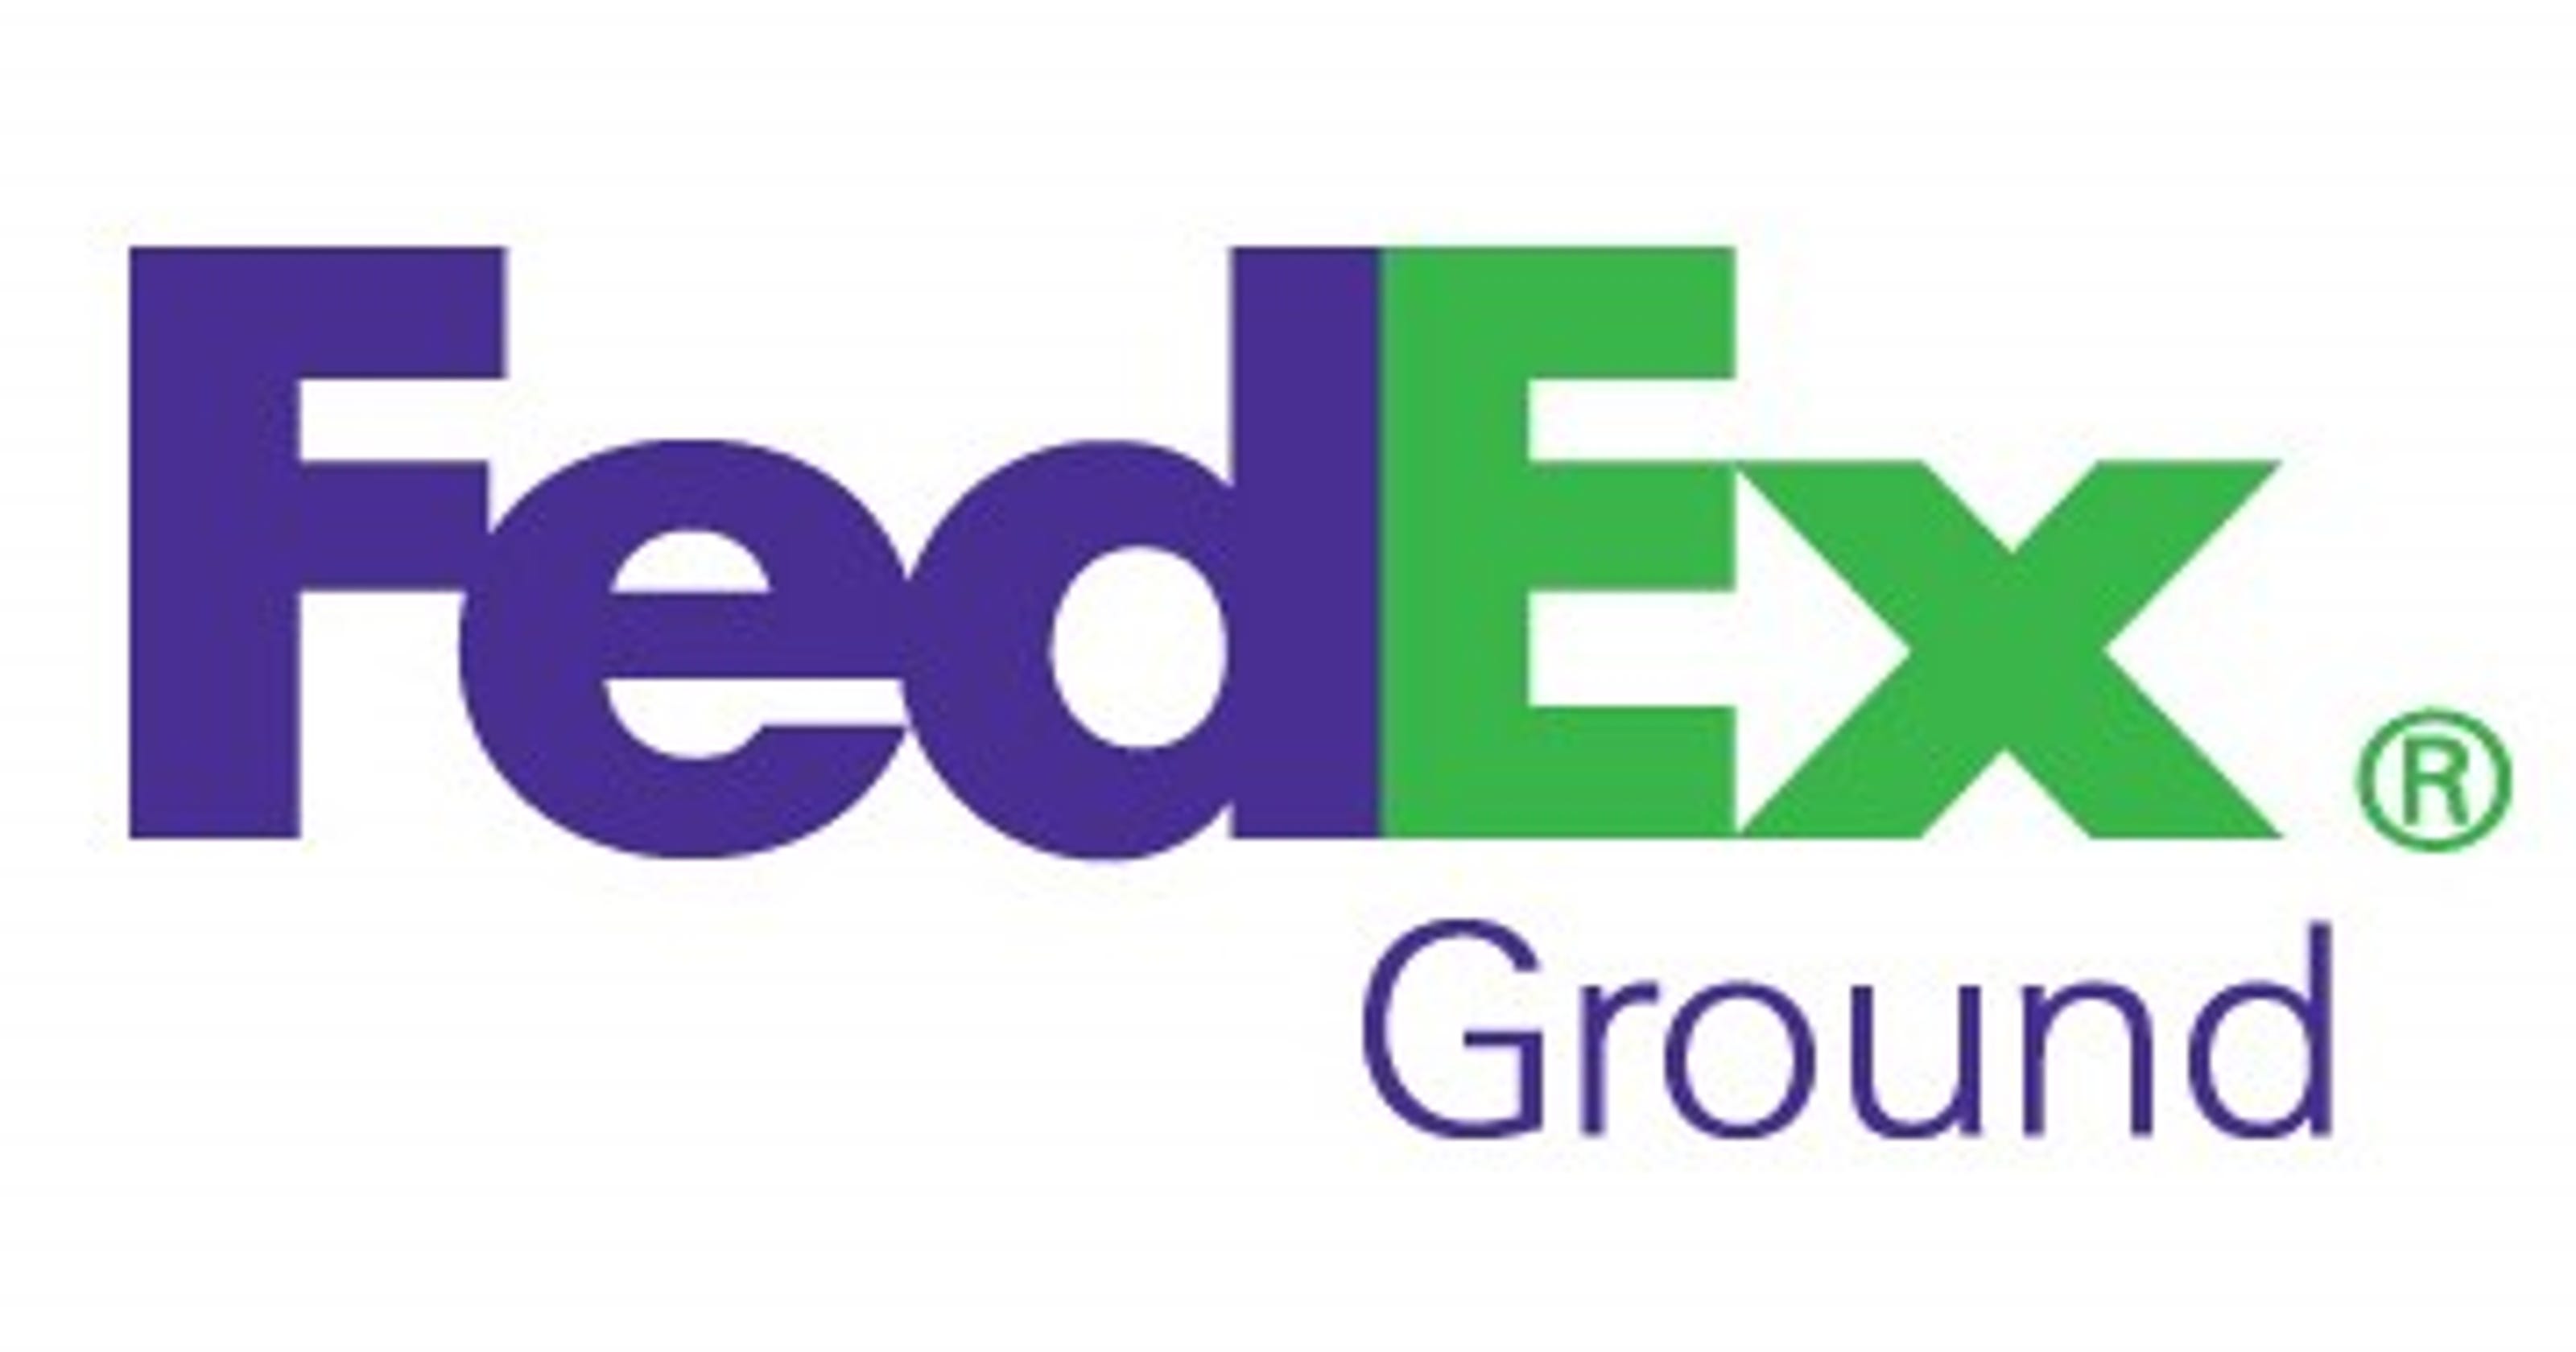 Fedex Ground Names Las Cruces Man Entrepreneur Of The Year 0147